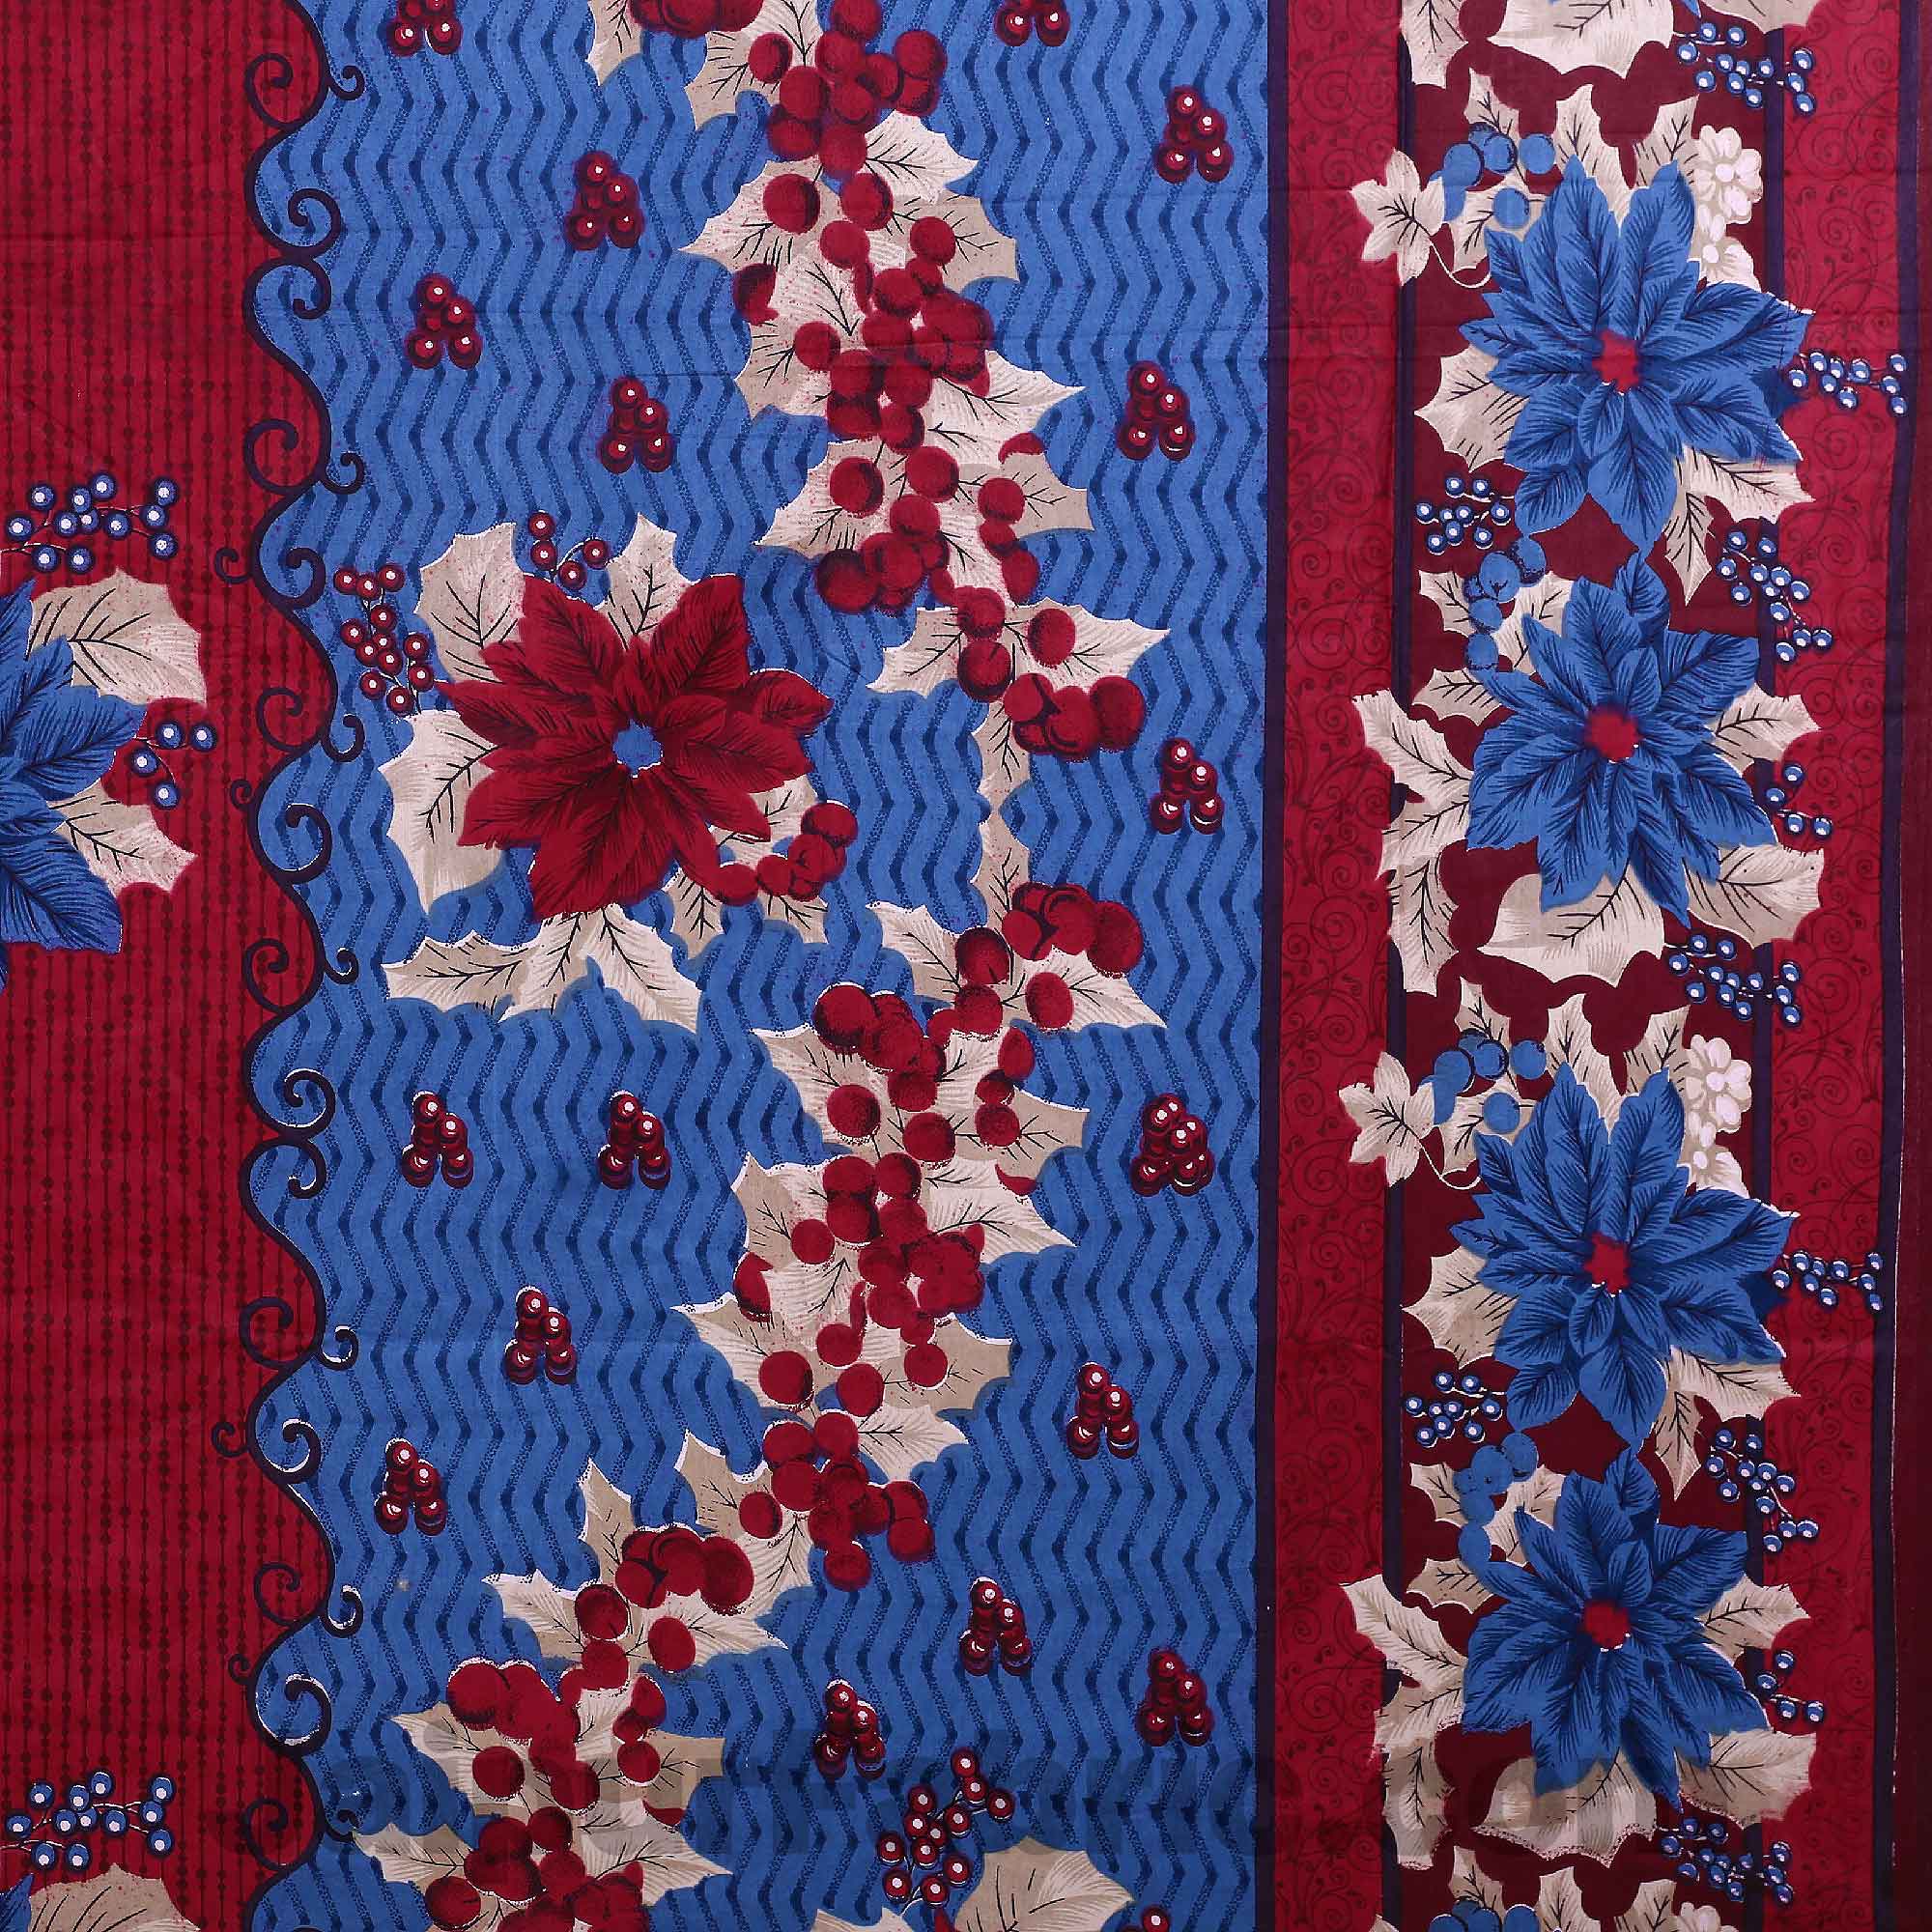 Pure Cotton Maroon and Blue Floral Jaipuri Procian Bedsheet